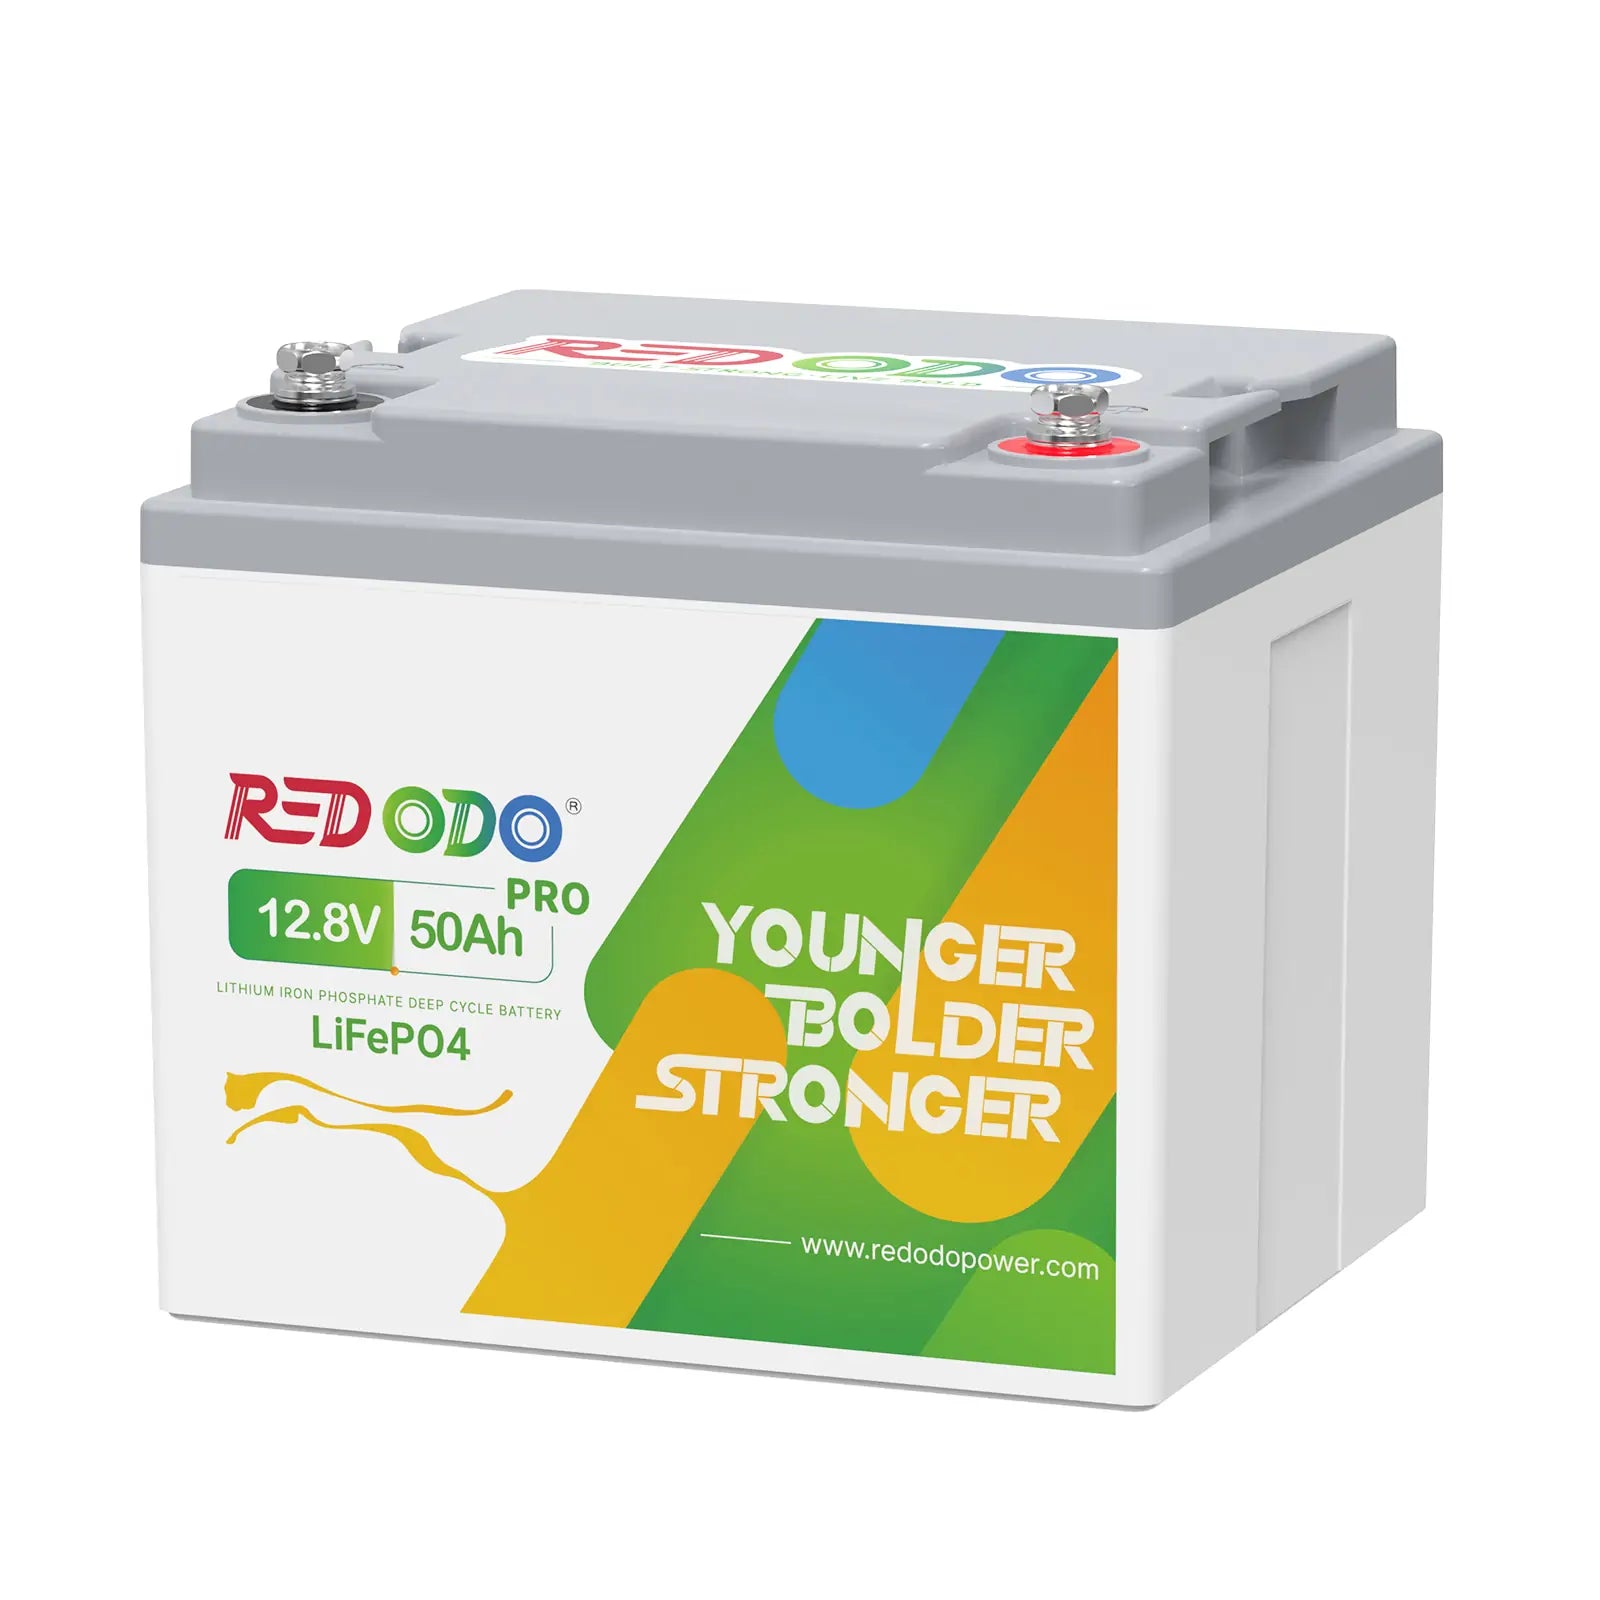 Redodo 12V 50Ah Pro LiFePO4 Battery